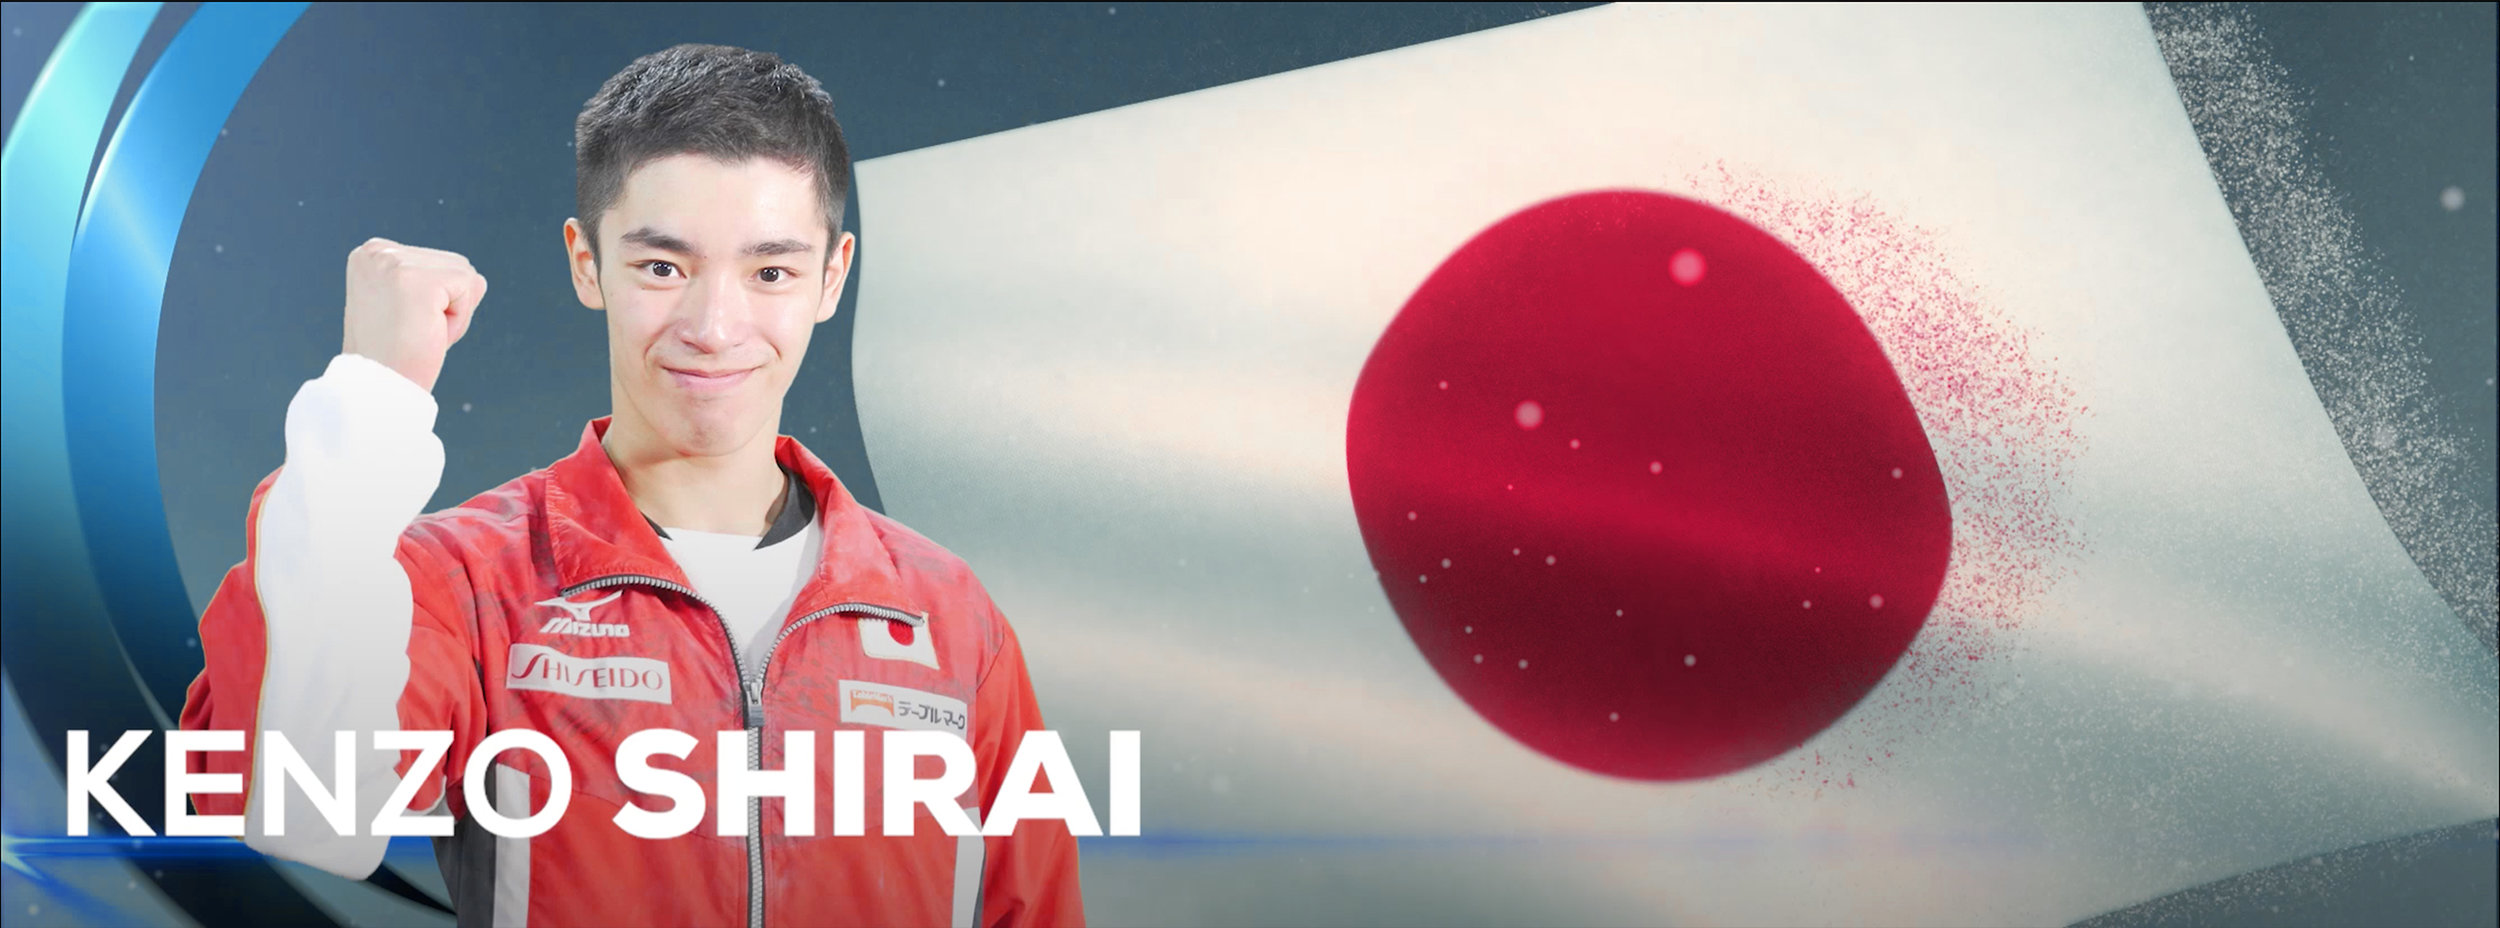 STILL - Kenzo Shirai Athlete Profile